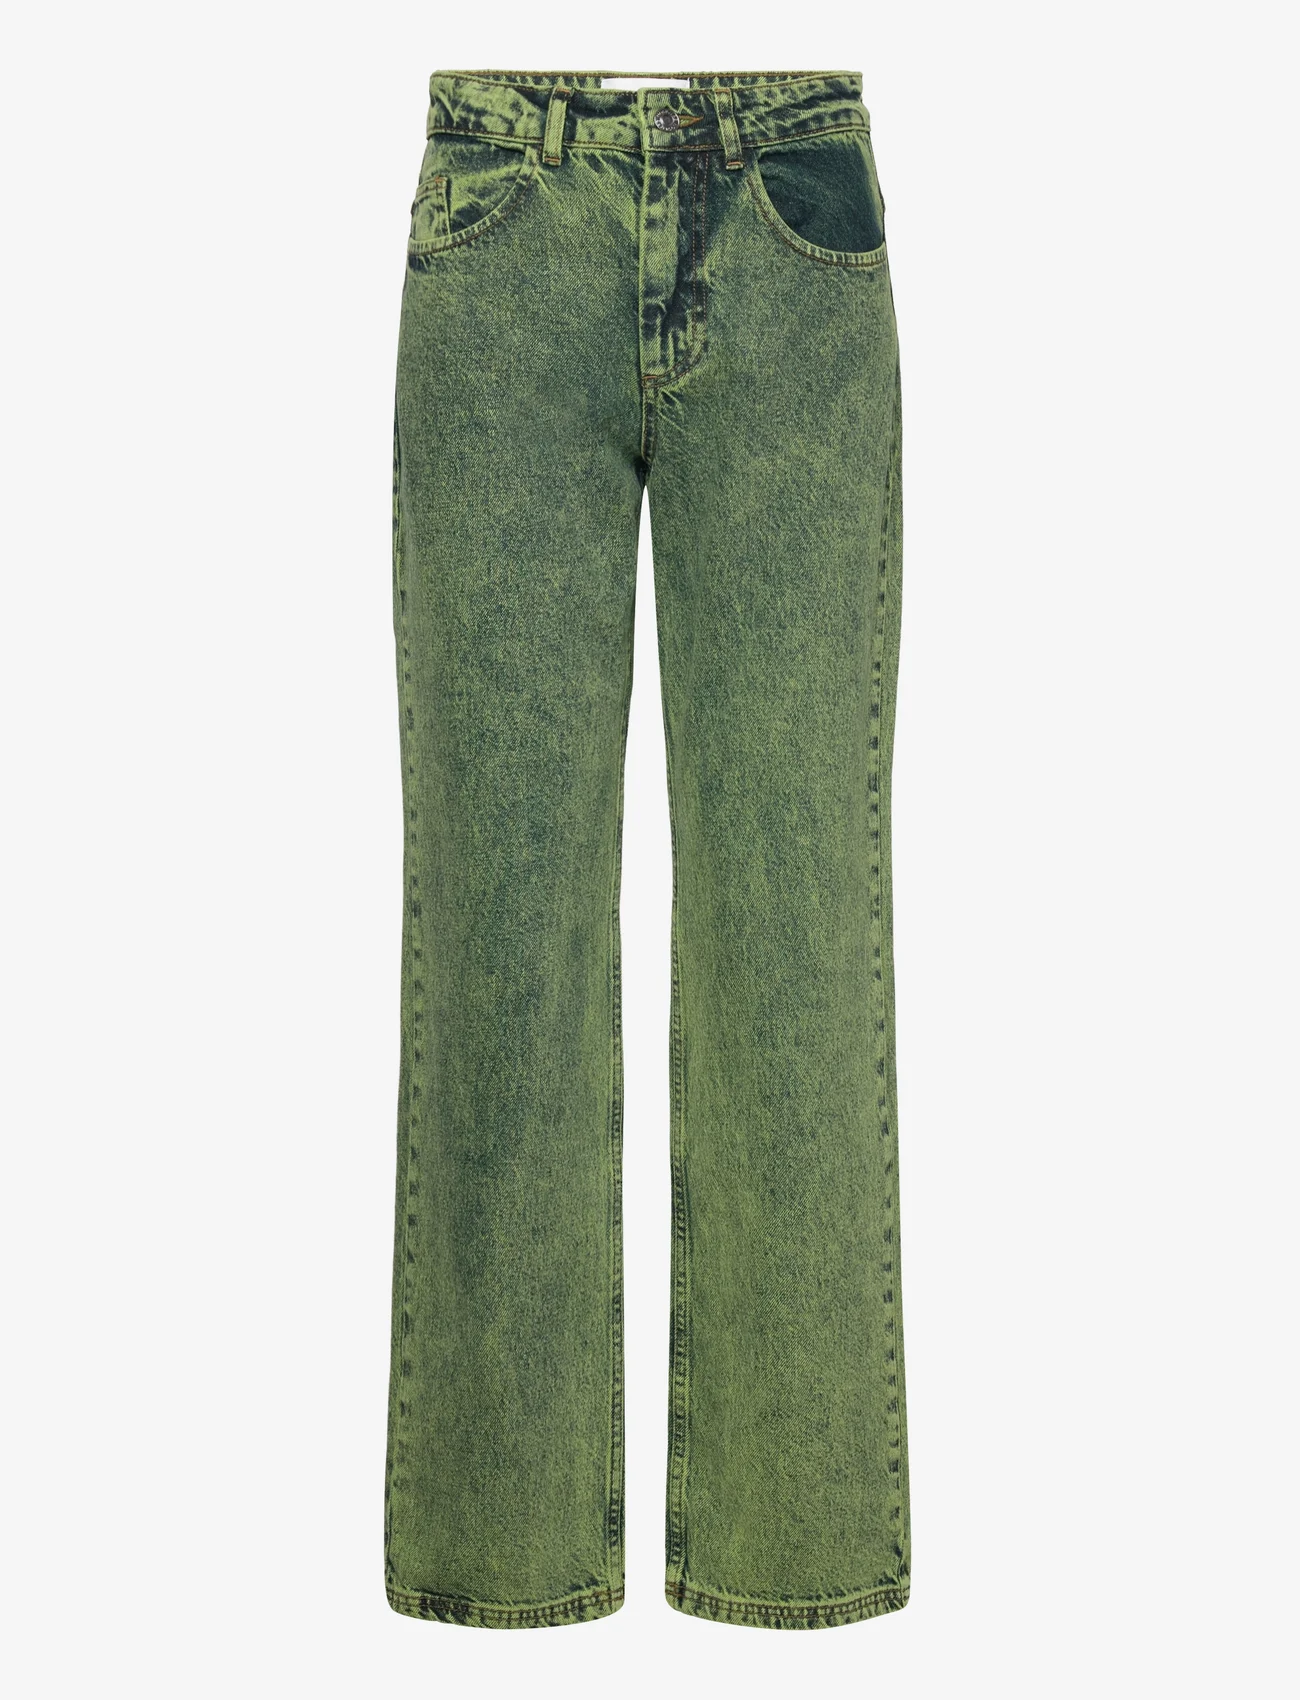 Hosbjerg - Leah Acid Denim Pants - wide leg jeans - lime green - 0